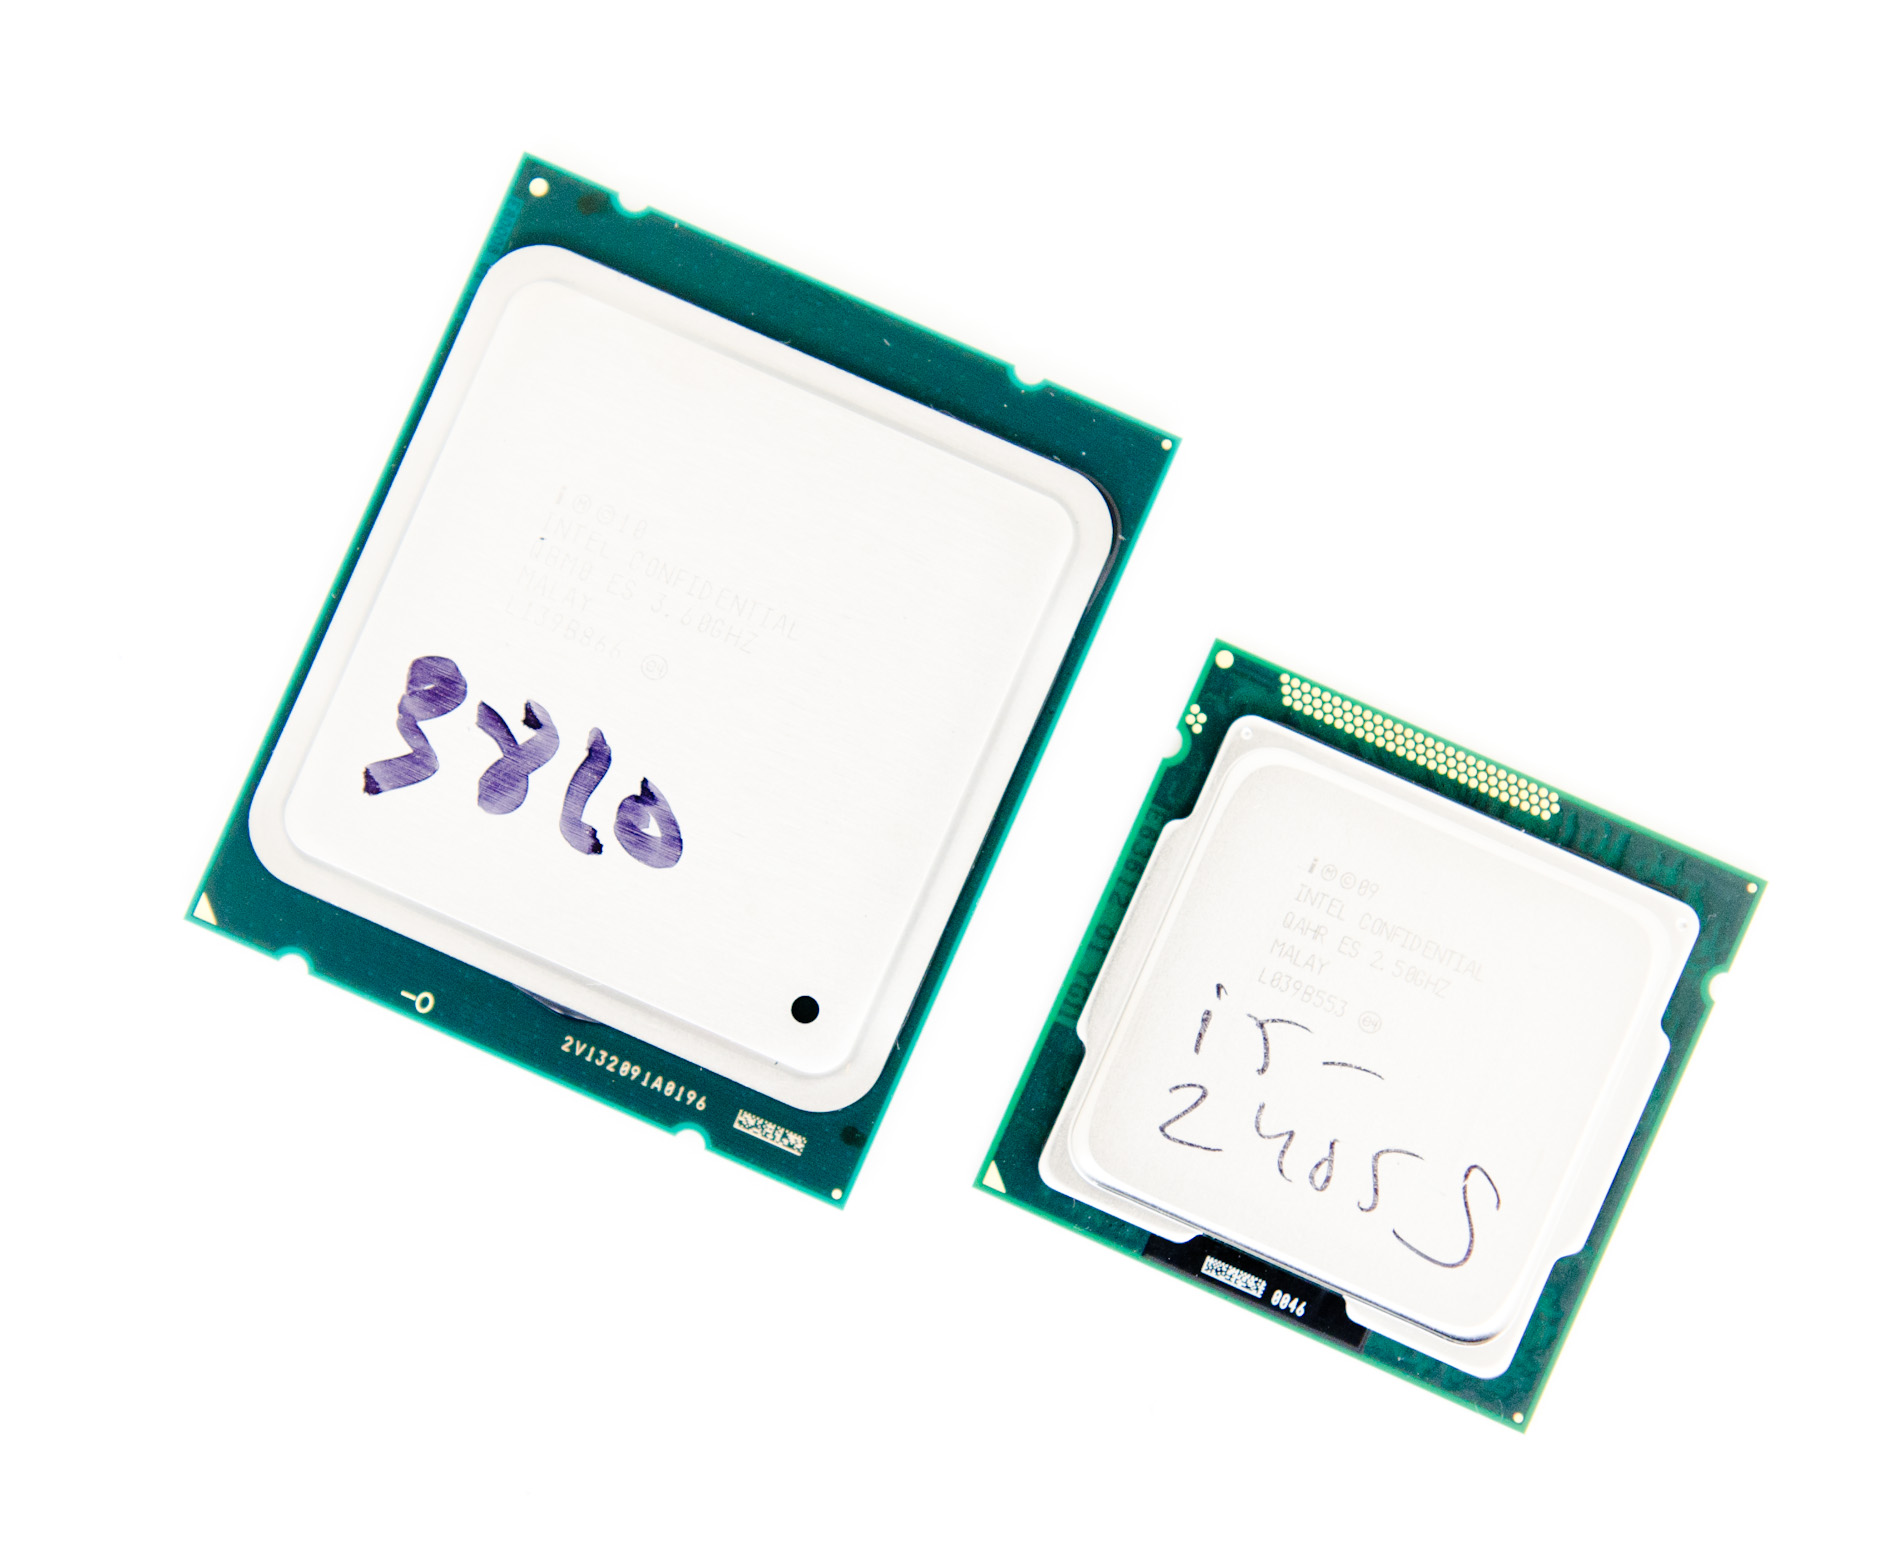 Intel Core i7 3820 Review: $285 Quad-Core Sandy Bridge E